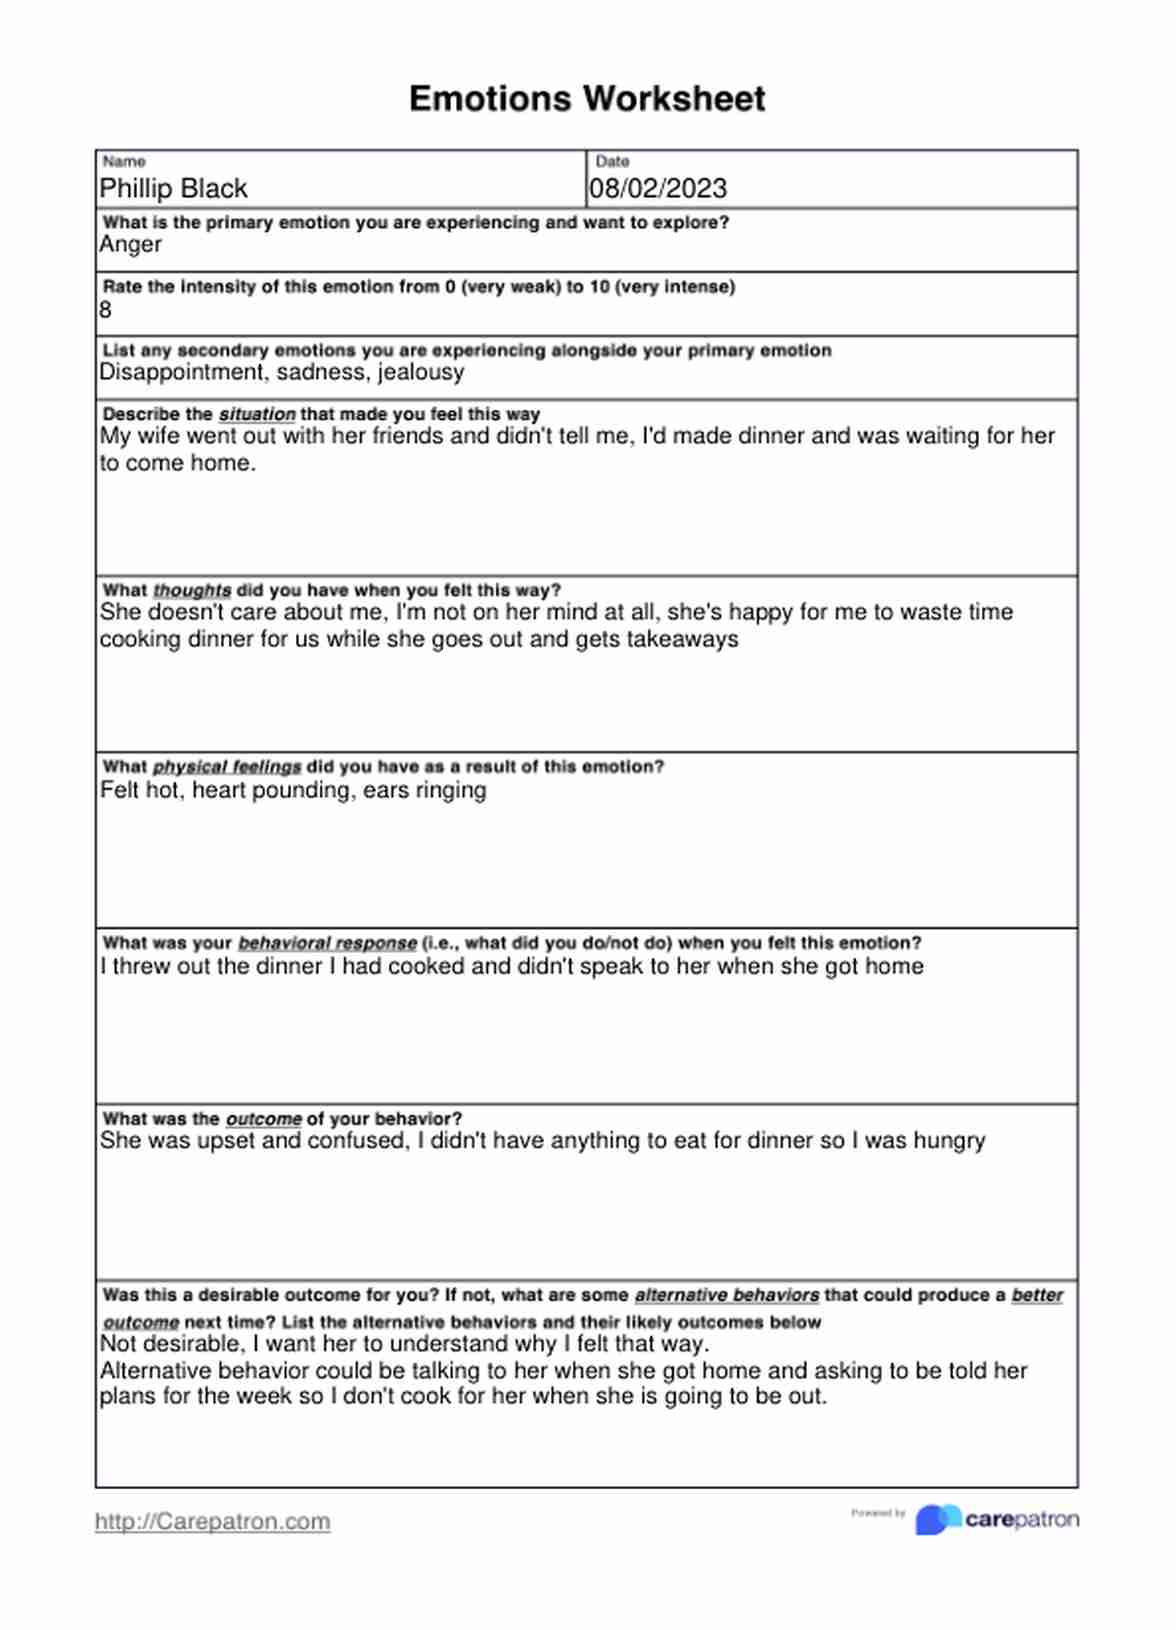 Emotions Worksheets PDF Example